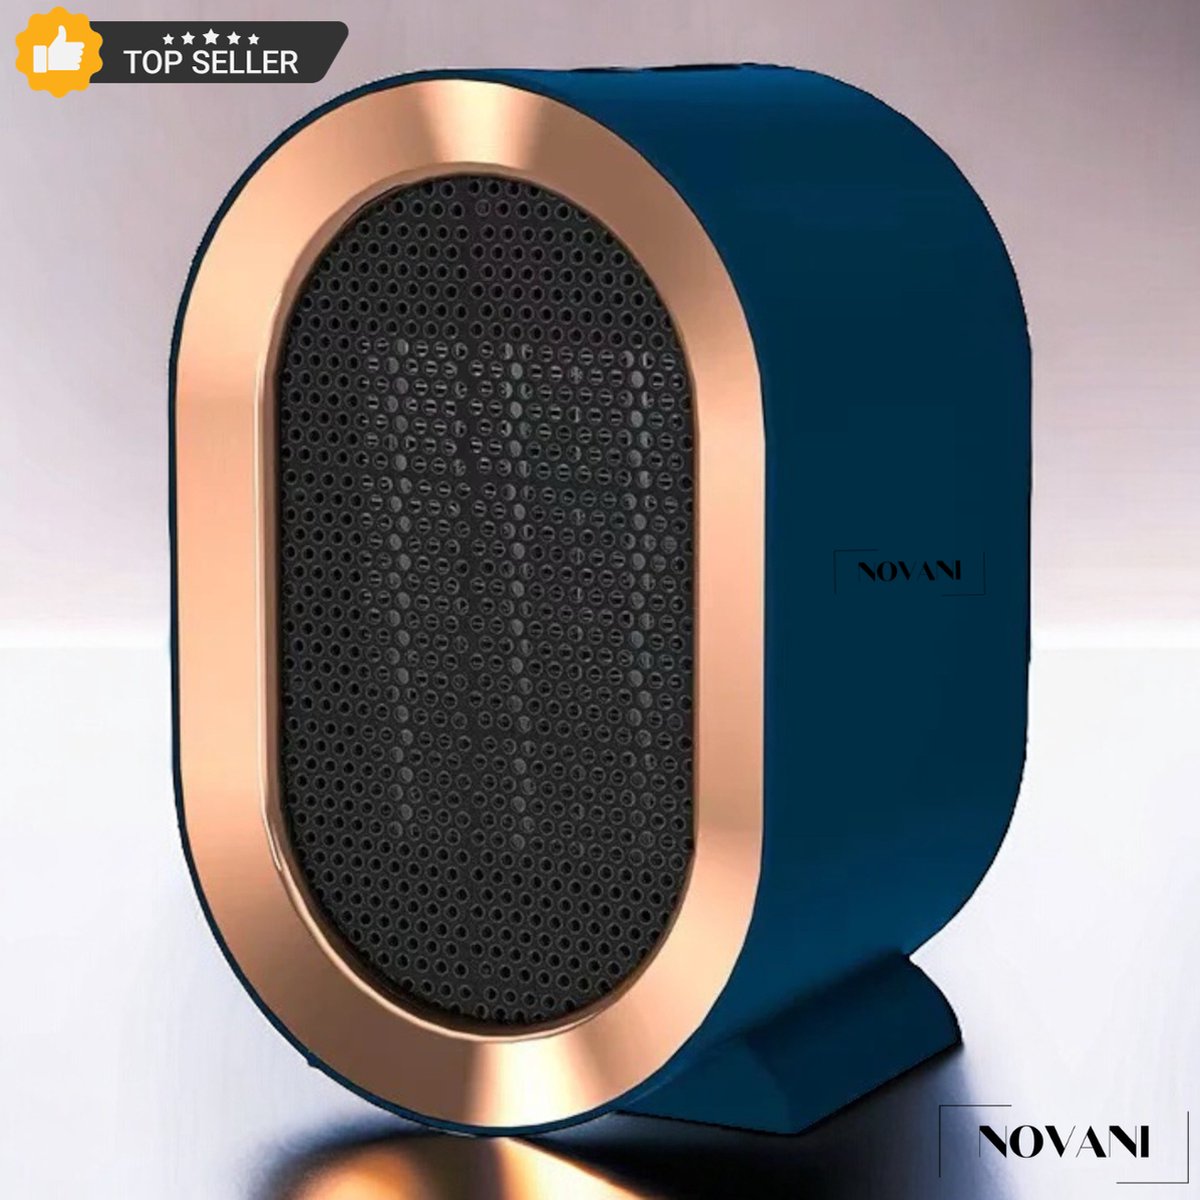 Novani - Luxe Elektrische ventilator - kachel - Verwarming - 800W/1200W - Winter - Zuinige Verwarming - Blauw